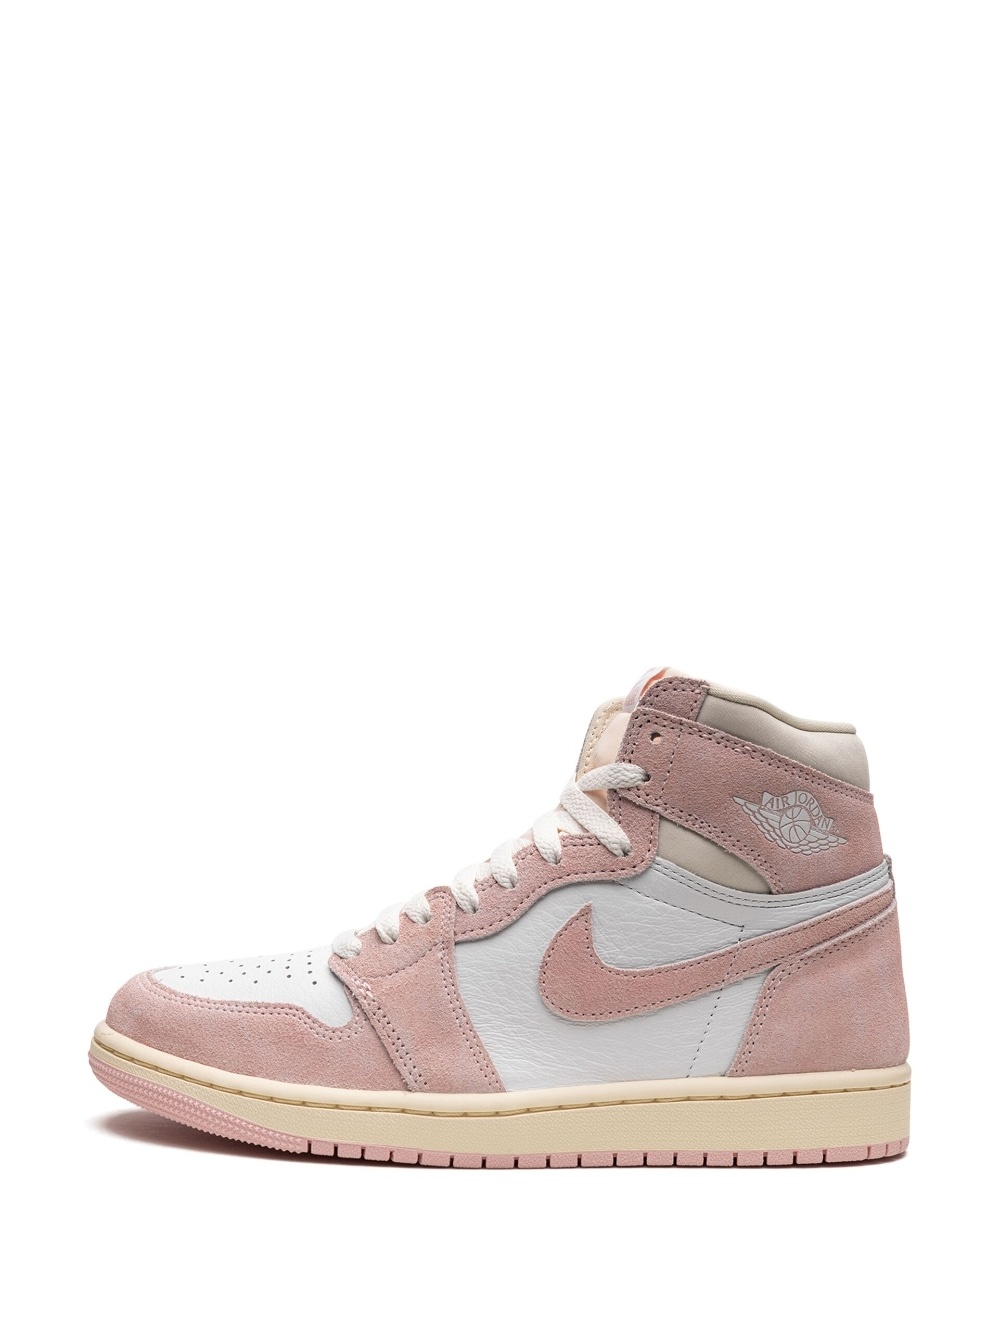 Air Jordan 1 "Washed Pink" sneakers - 5